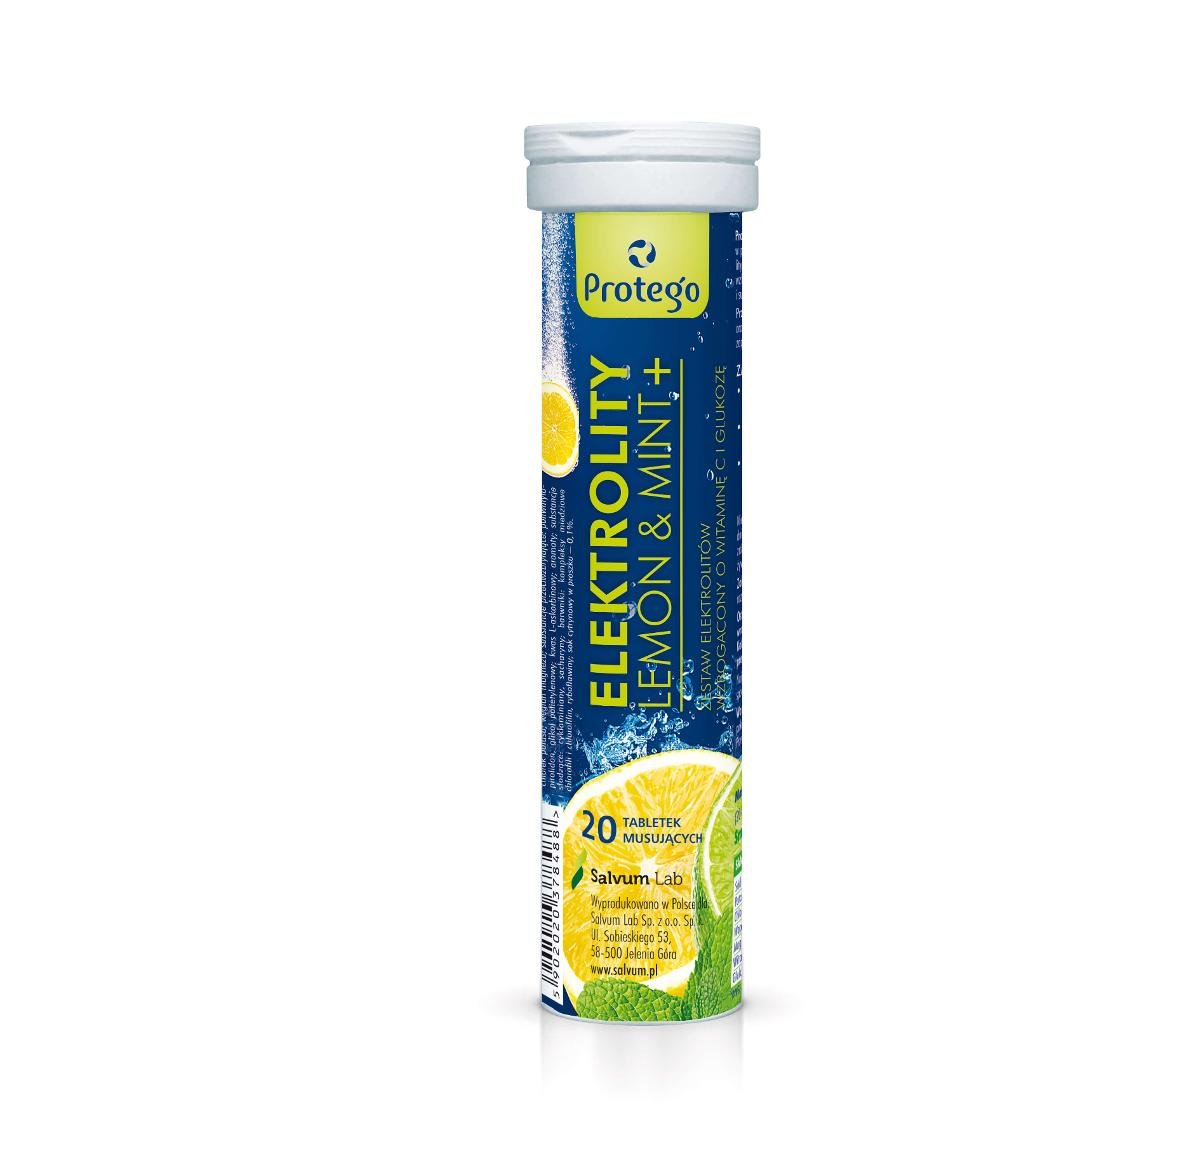 Protego Elektrolity Lemon Mint+, suplement diety, 20 tabletek musujących  3569361